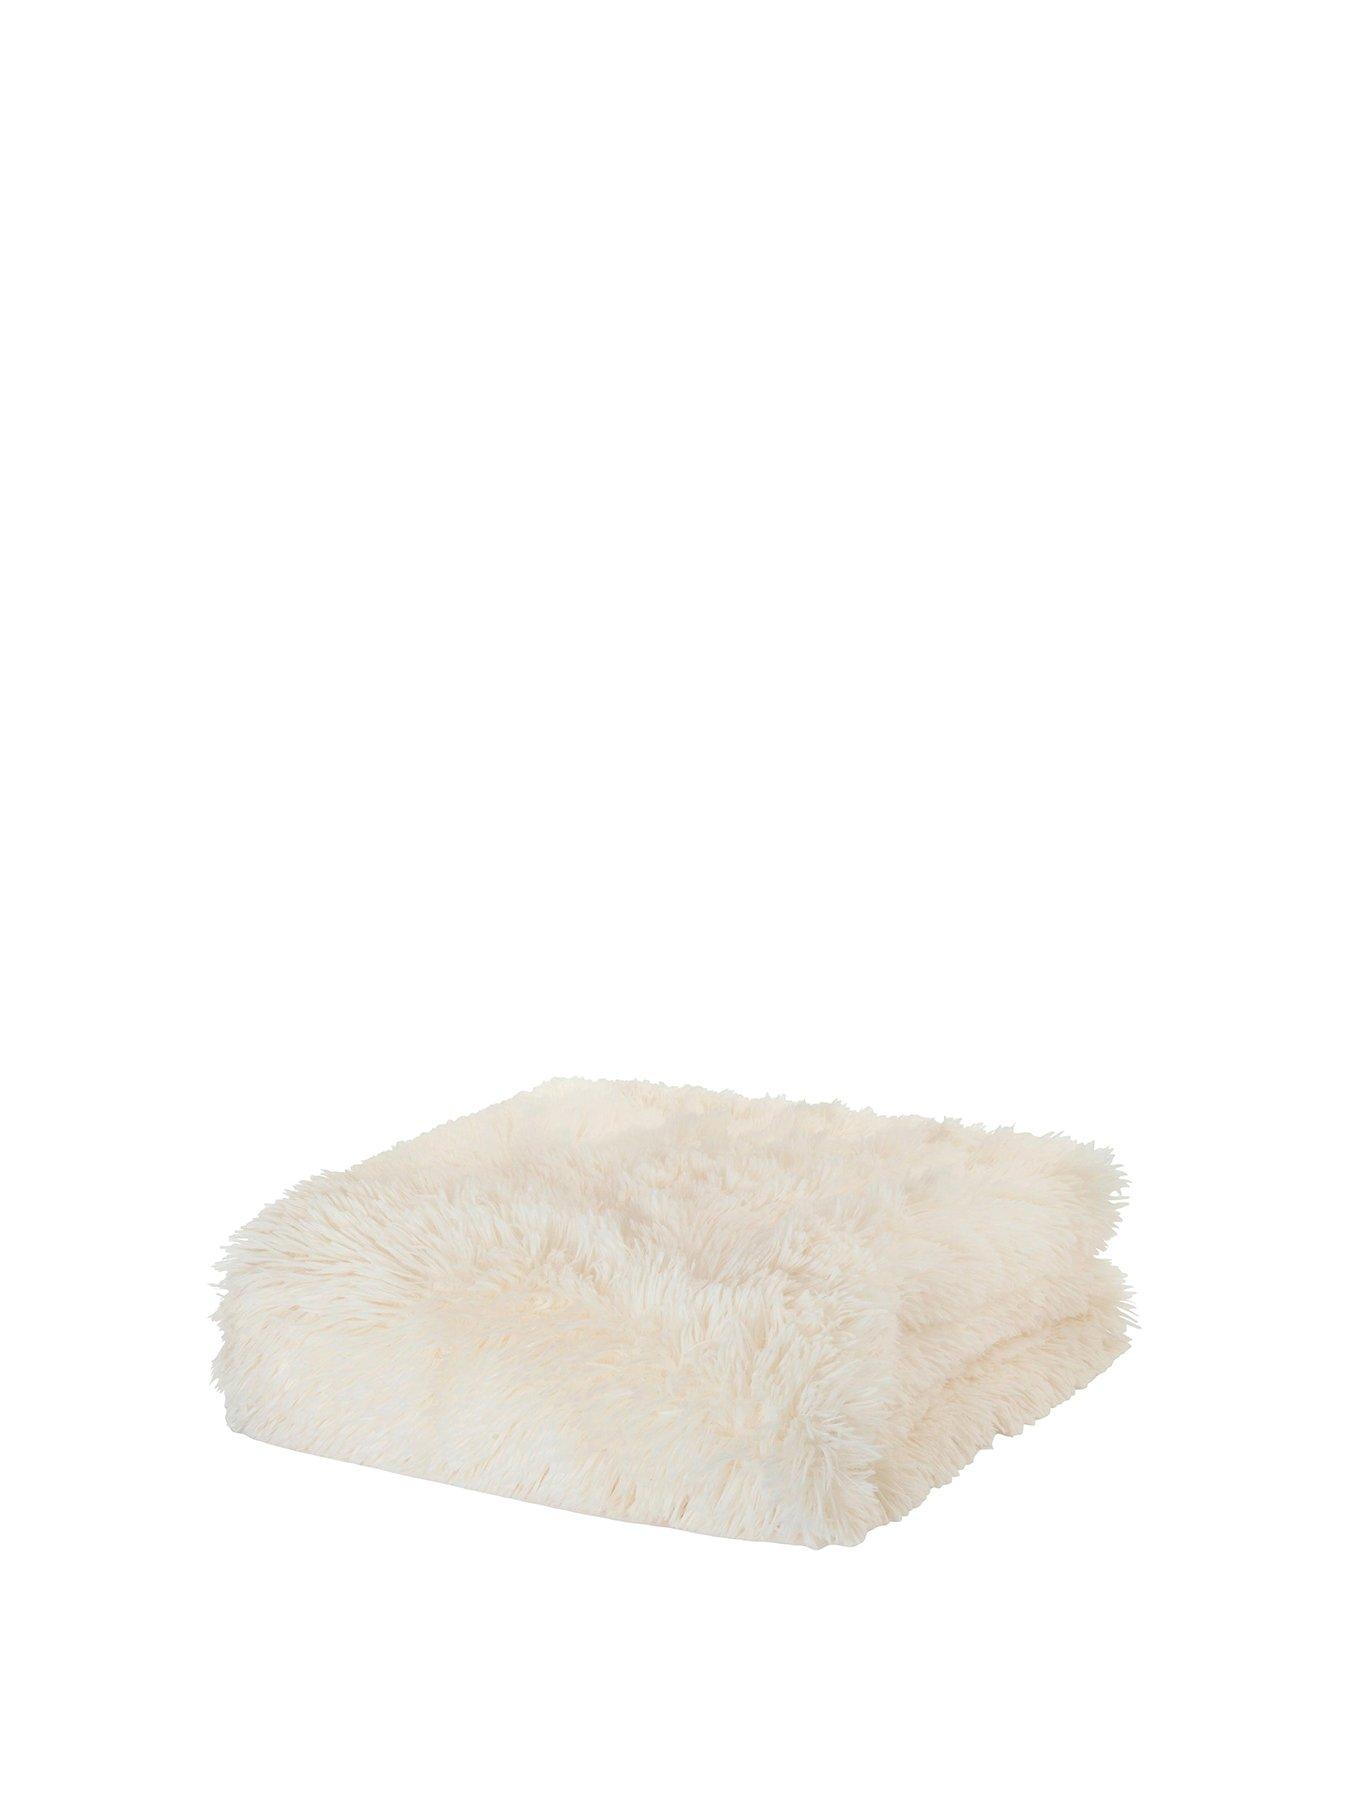 Catherine Lansfield Velvet Faux Fur Throw Blankets Luxury Throws 150cm x 200cm 